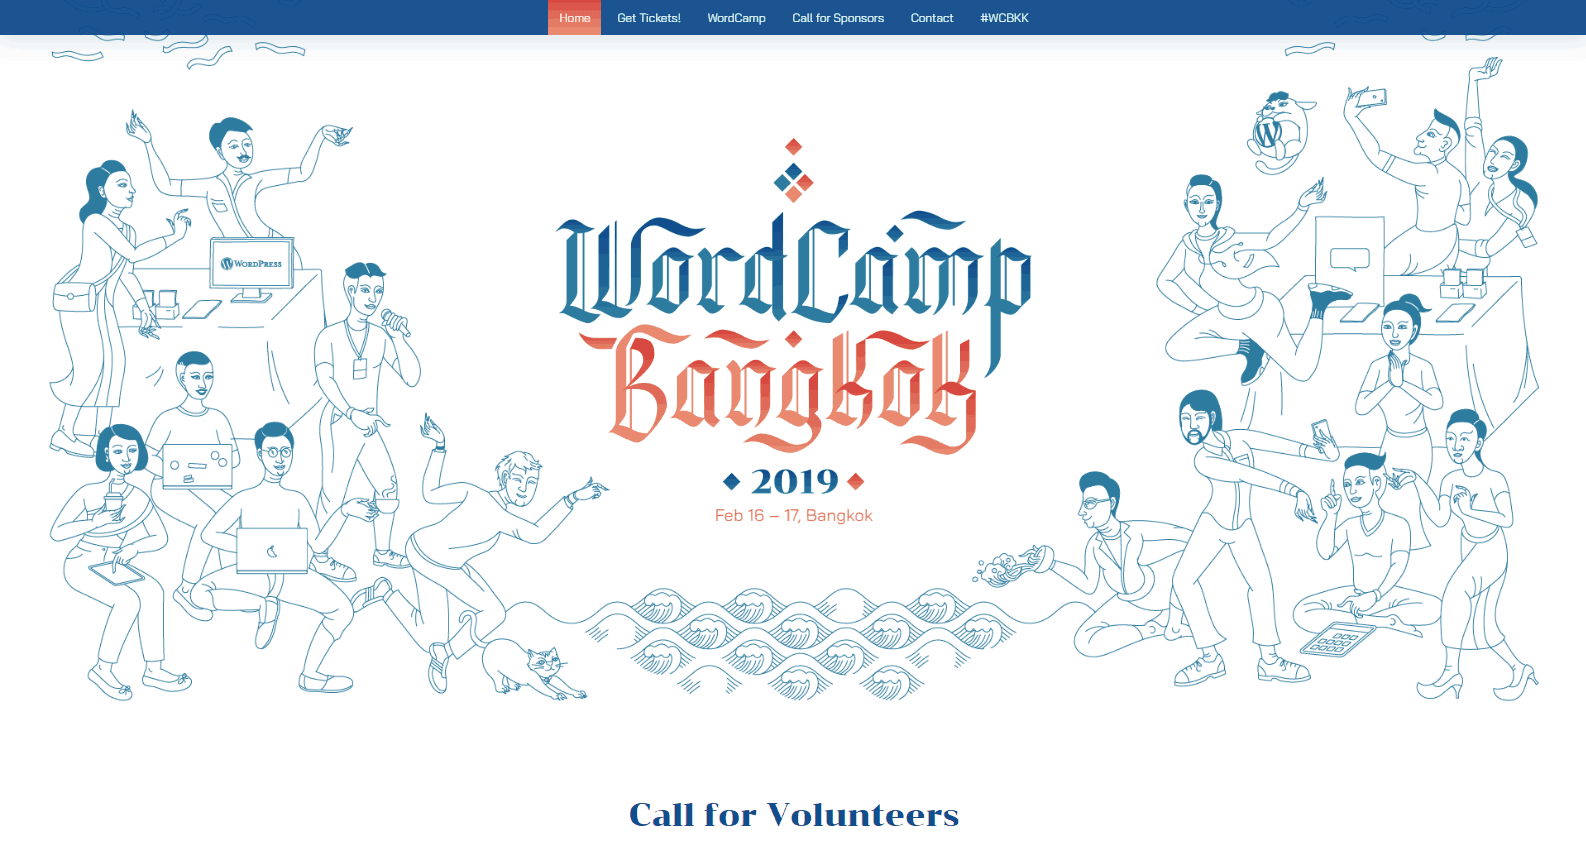 WordPress events: The WordCamp Bangkok website.